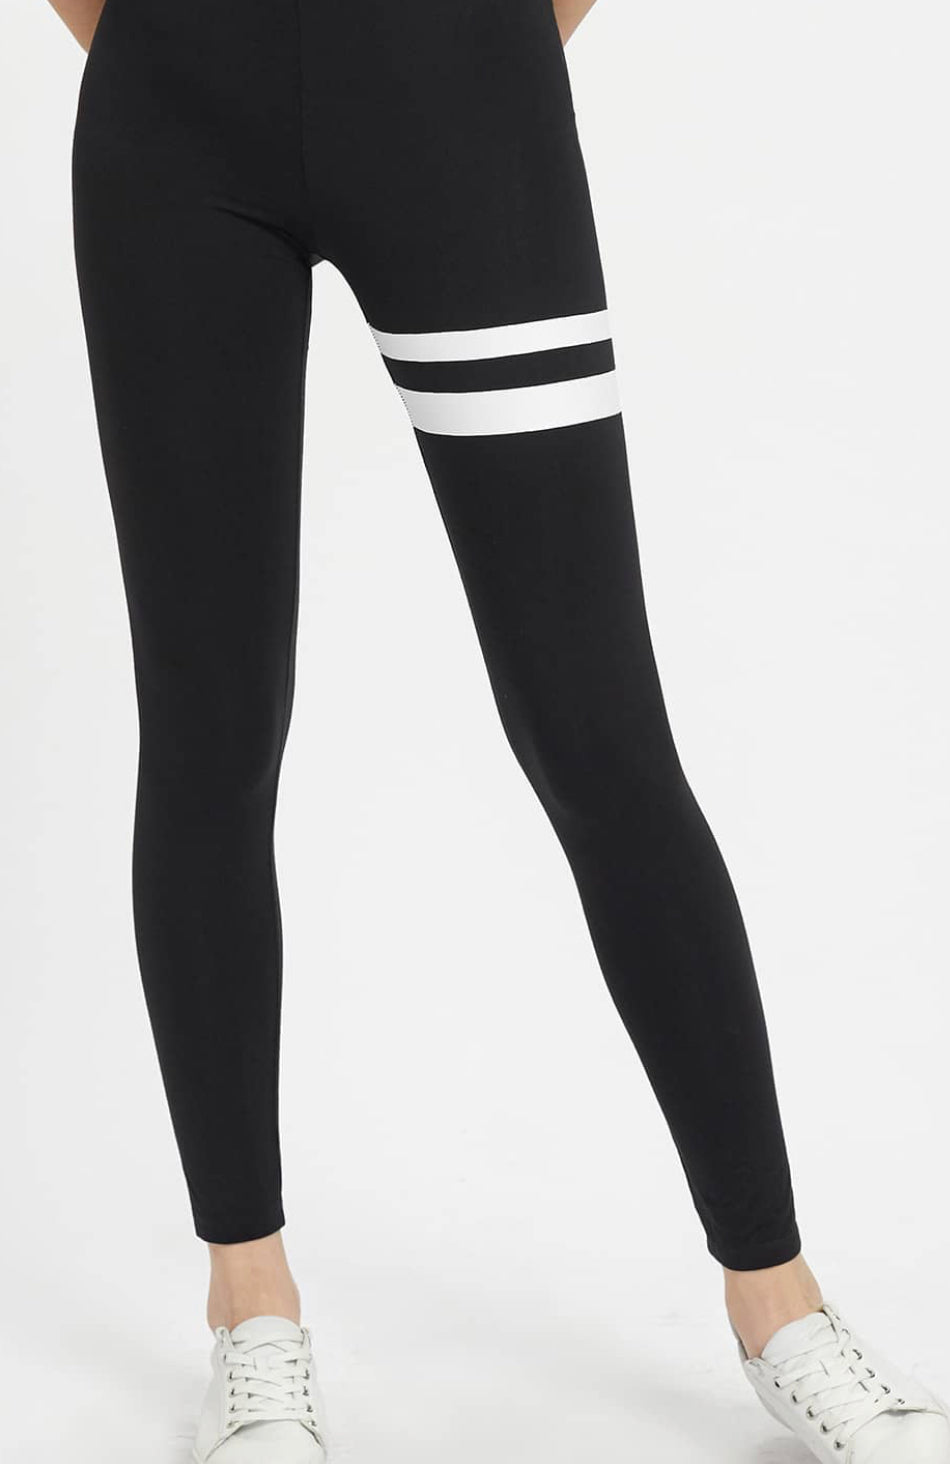 Basic White Stripes Yoga Sports Fashion Casual Leggings